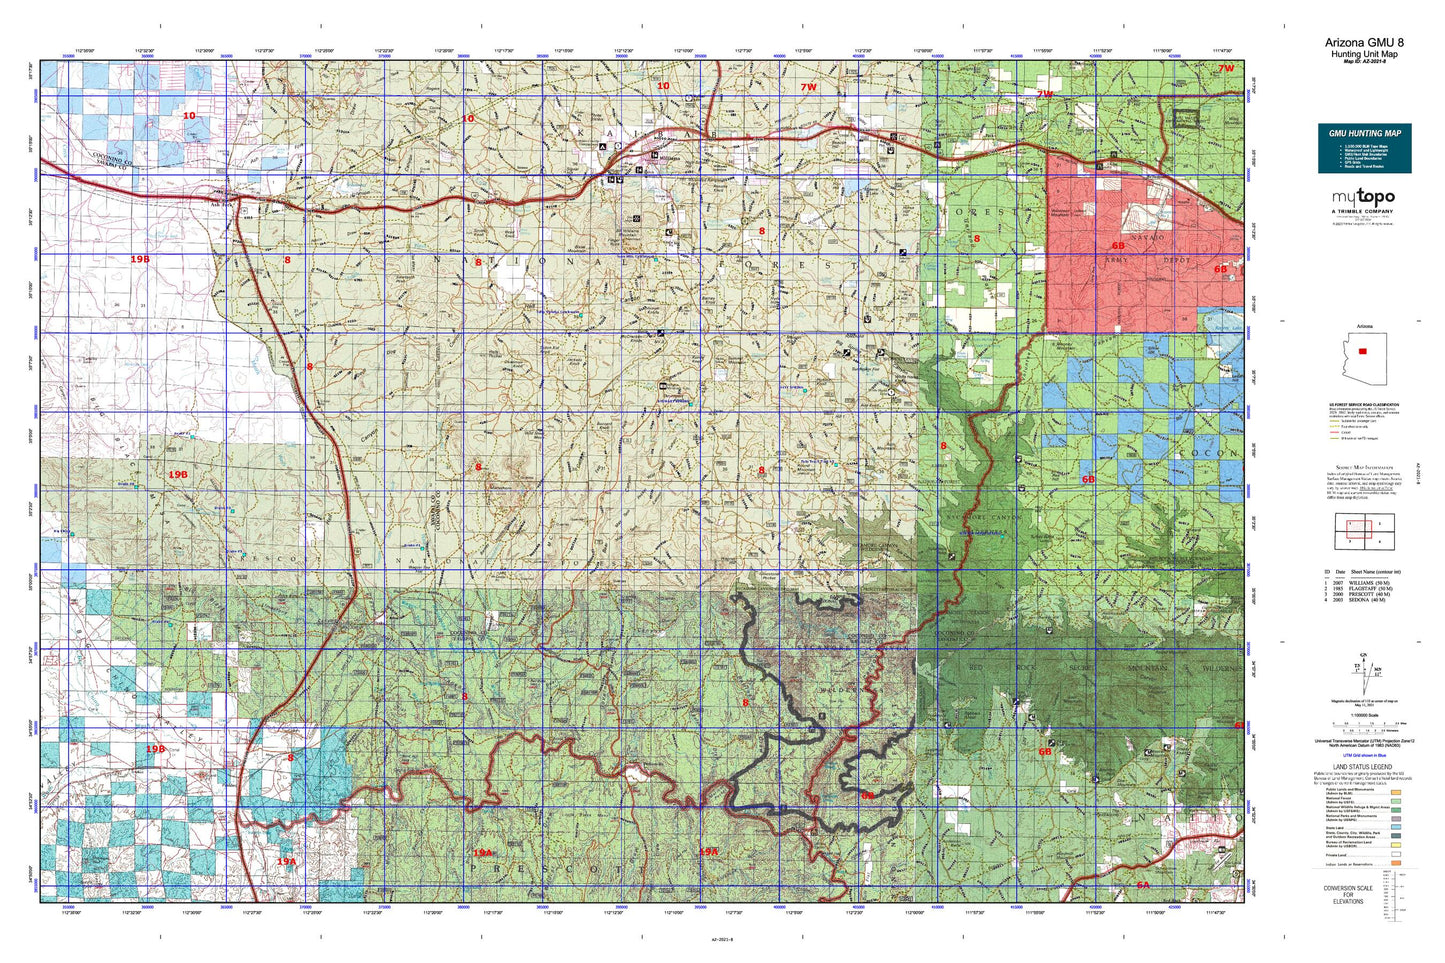 Arizona GMU 8 Map Image